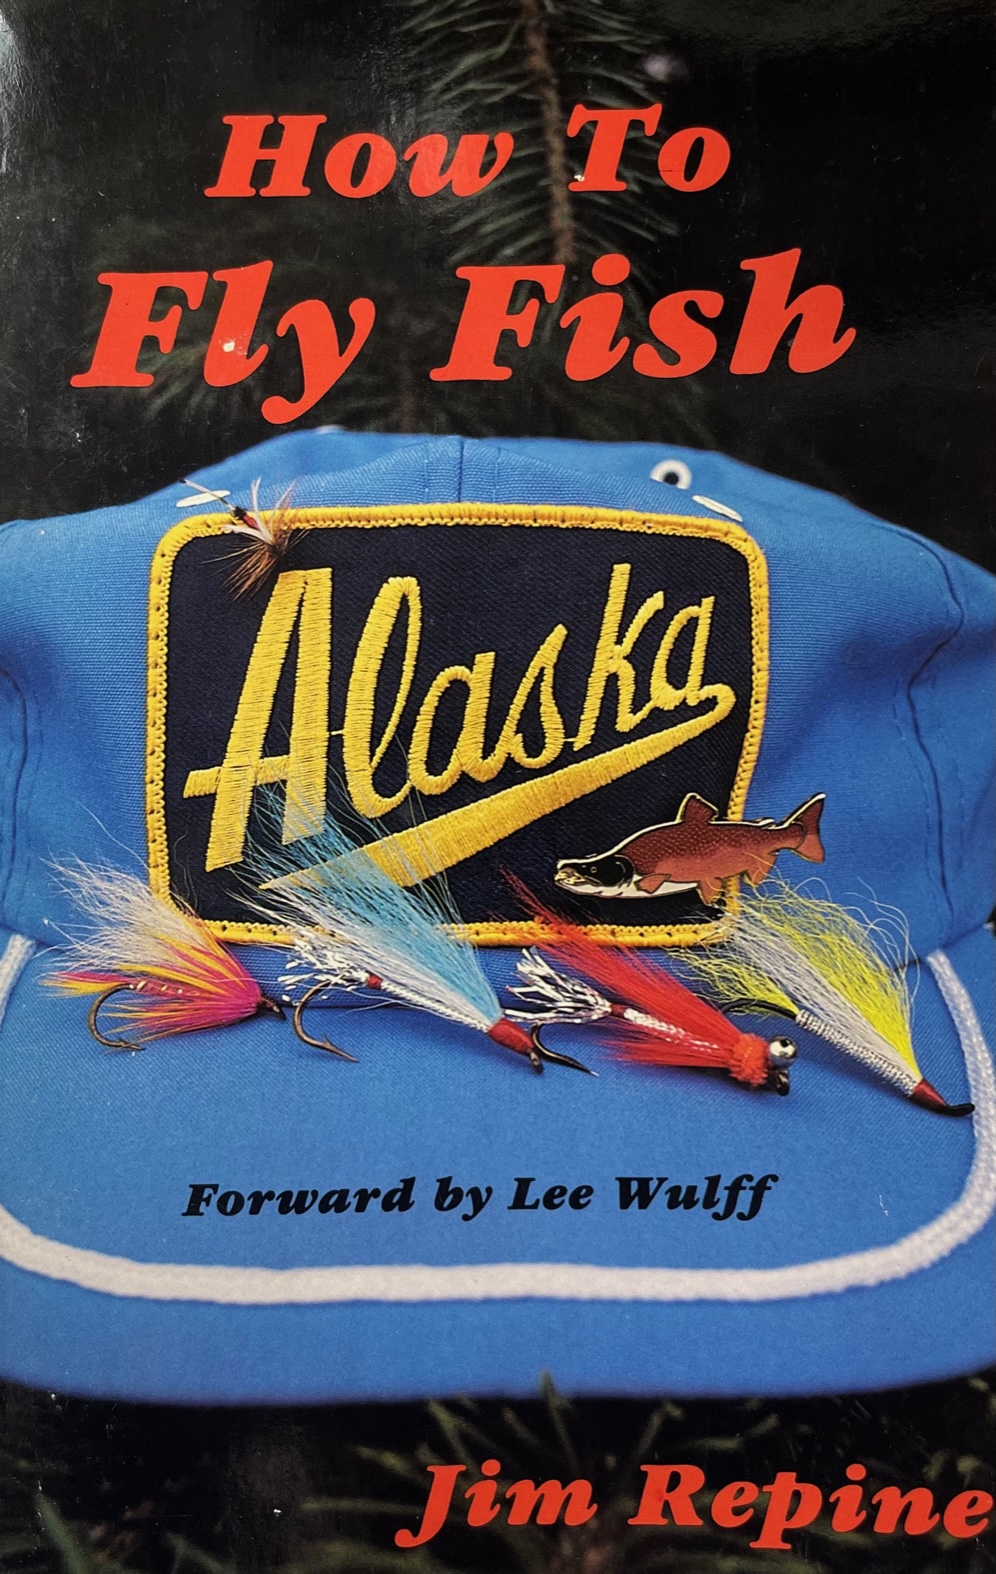 How to Fly Fish Alaska